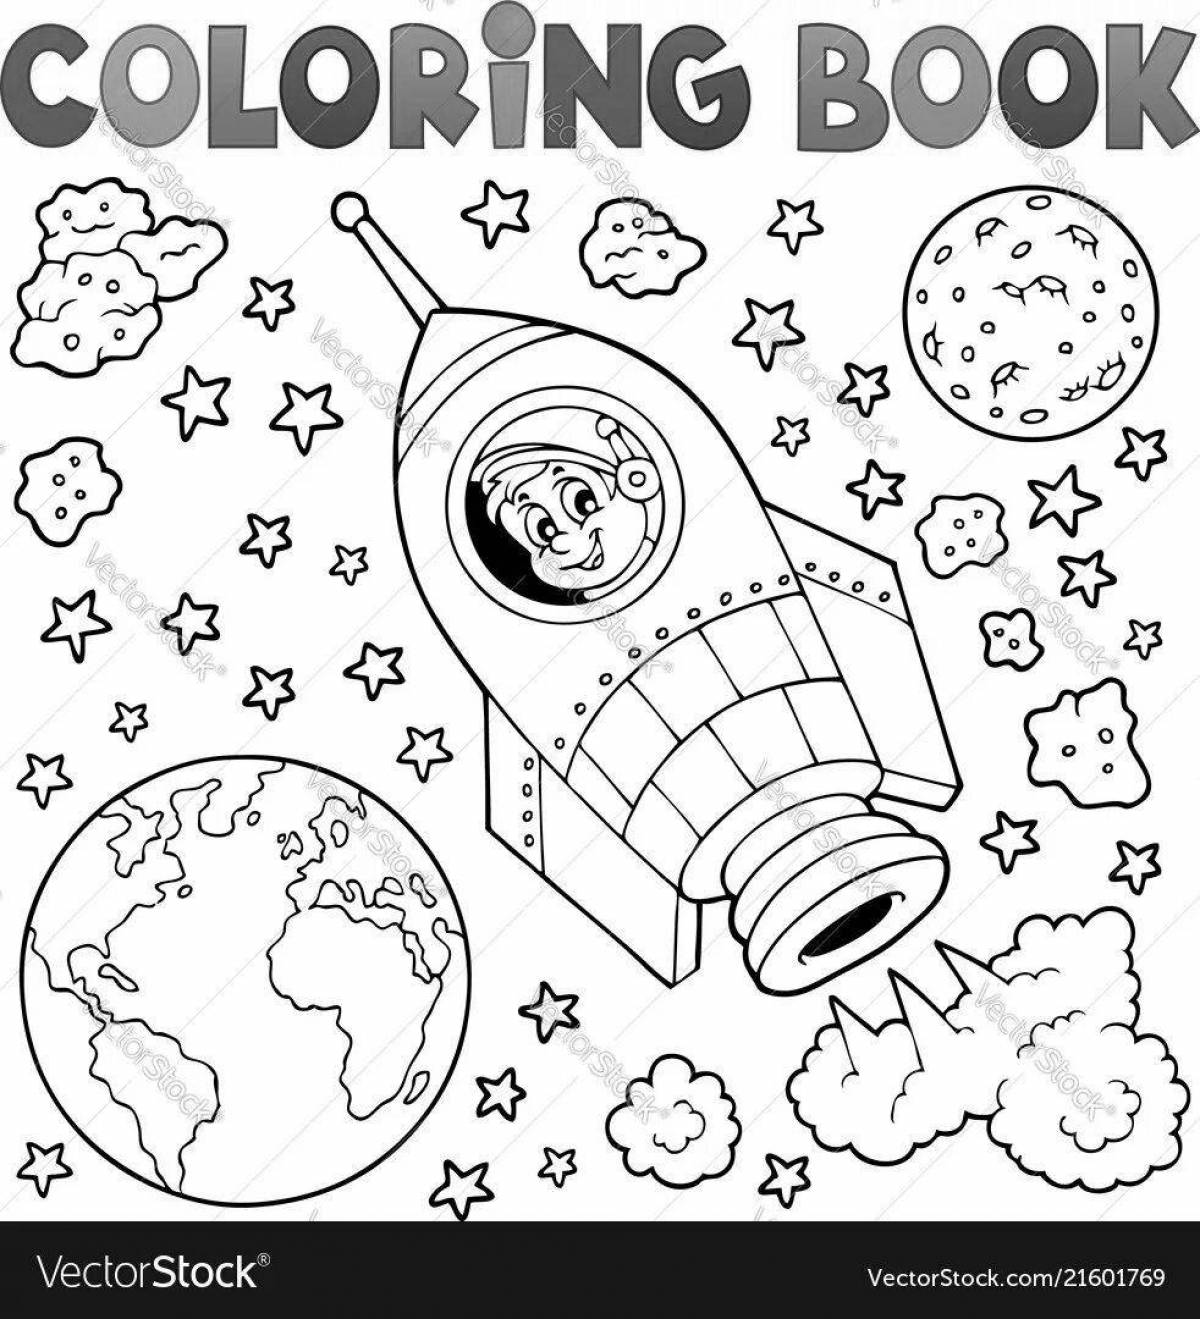 Adorable intergalactic space coloring book